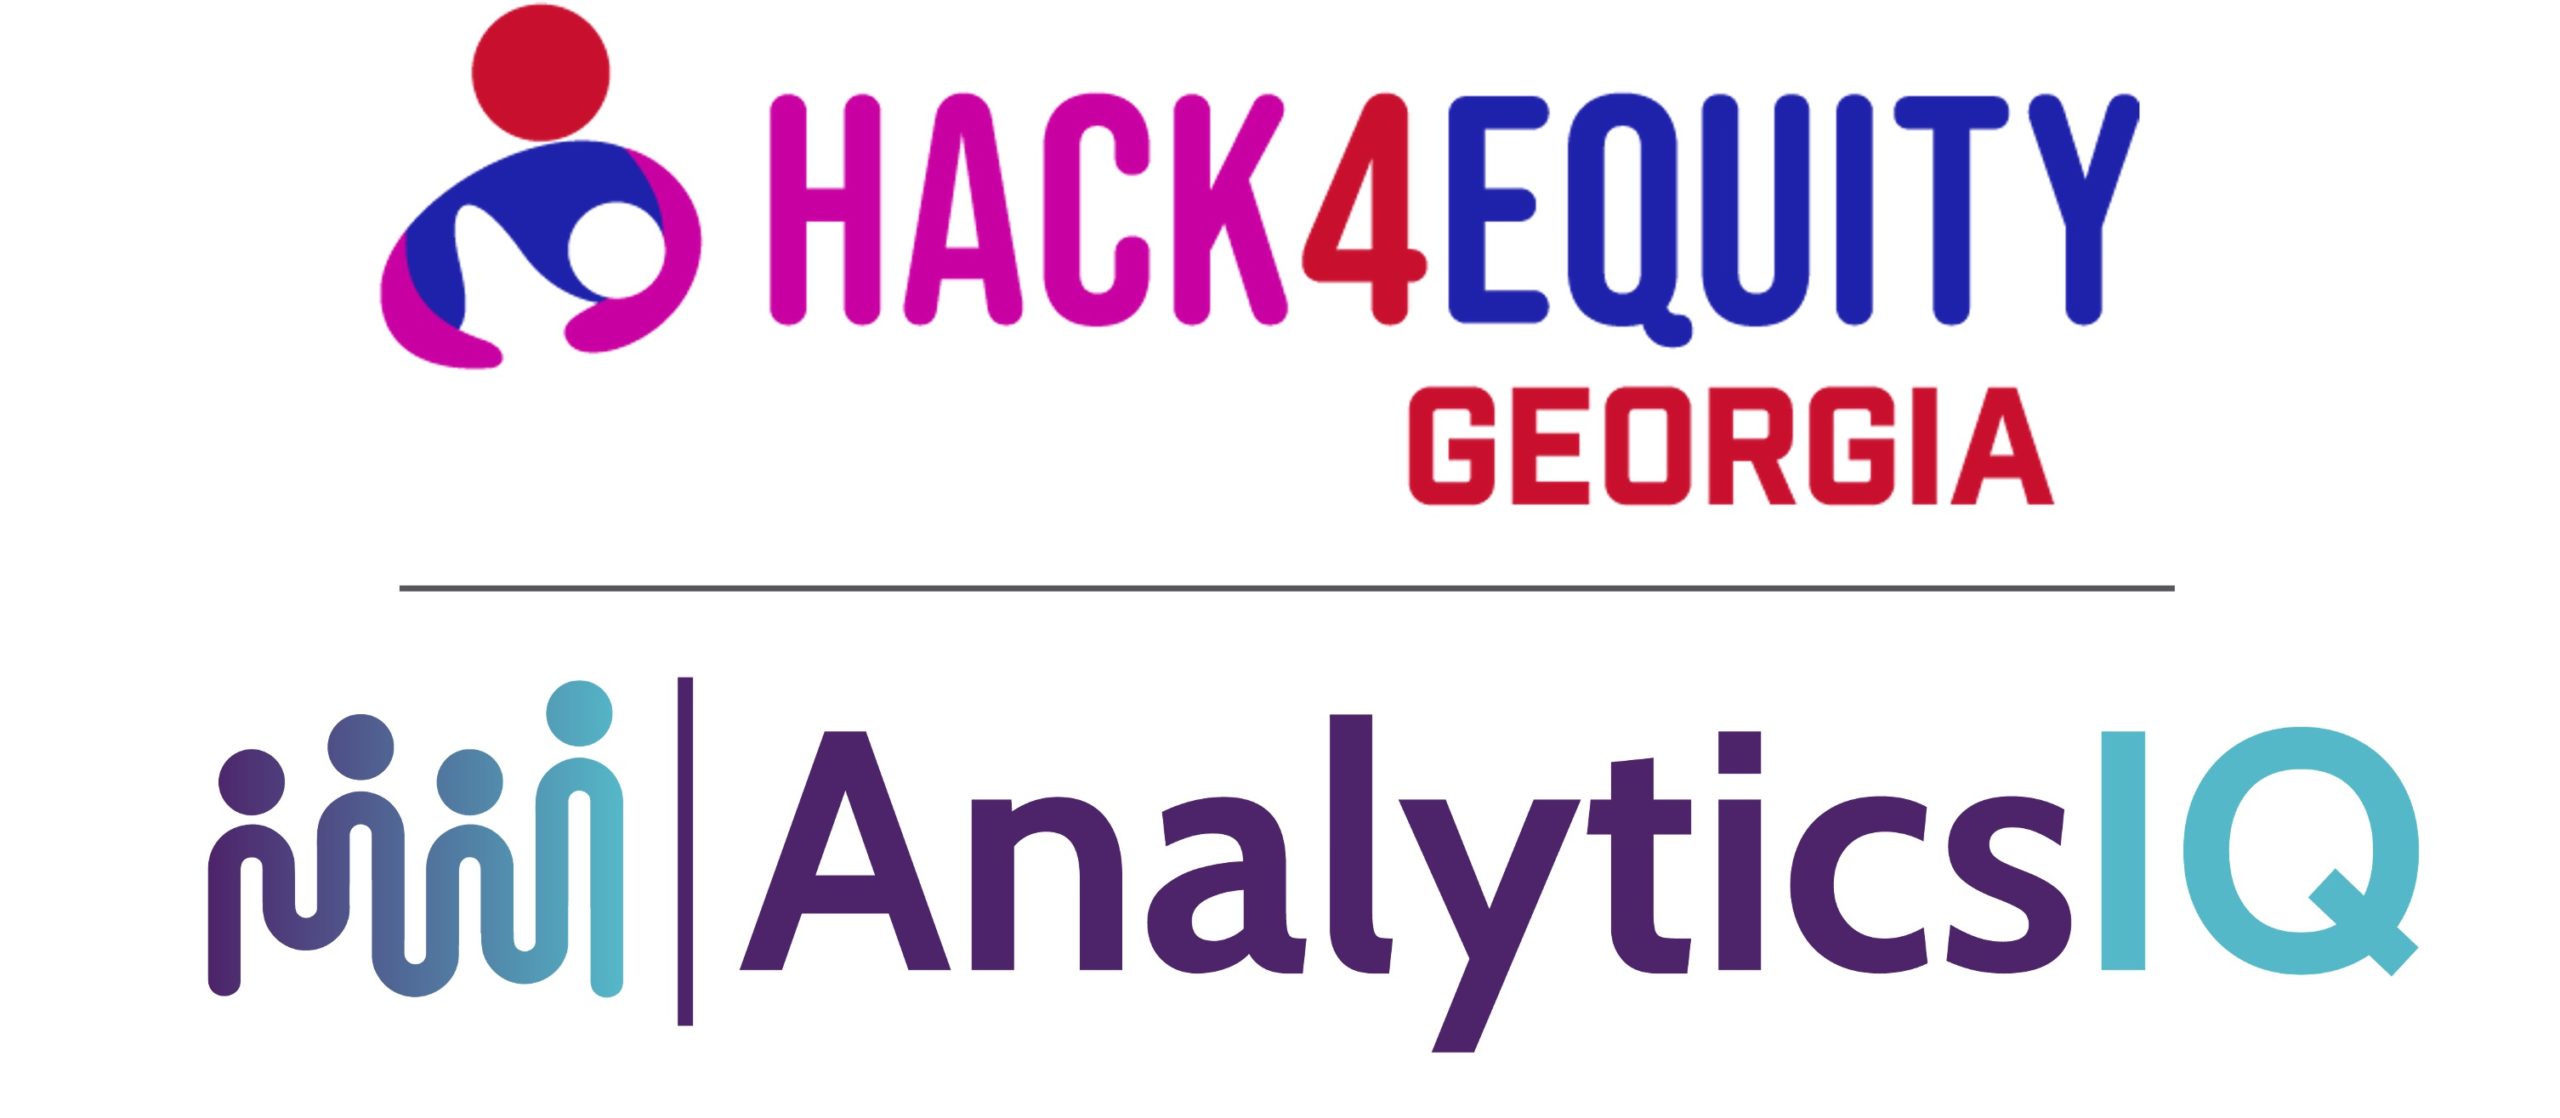 AnalyticsIQ is Proud to Contribute Data to Hack4EquityGA’s Hackathon to Combat Maternal Health Disparities